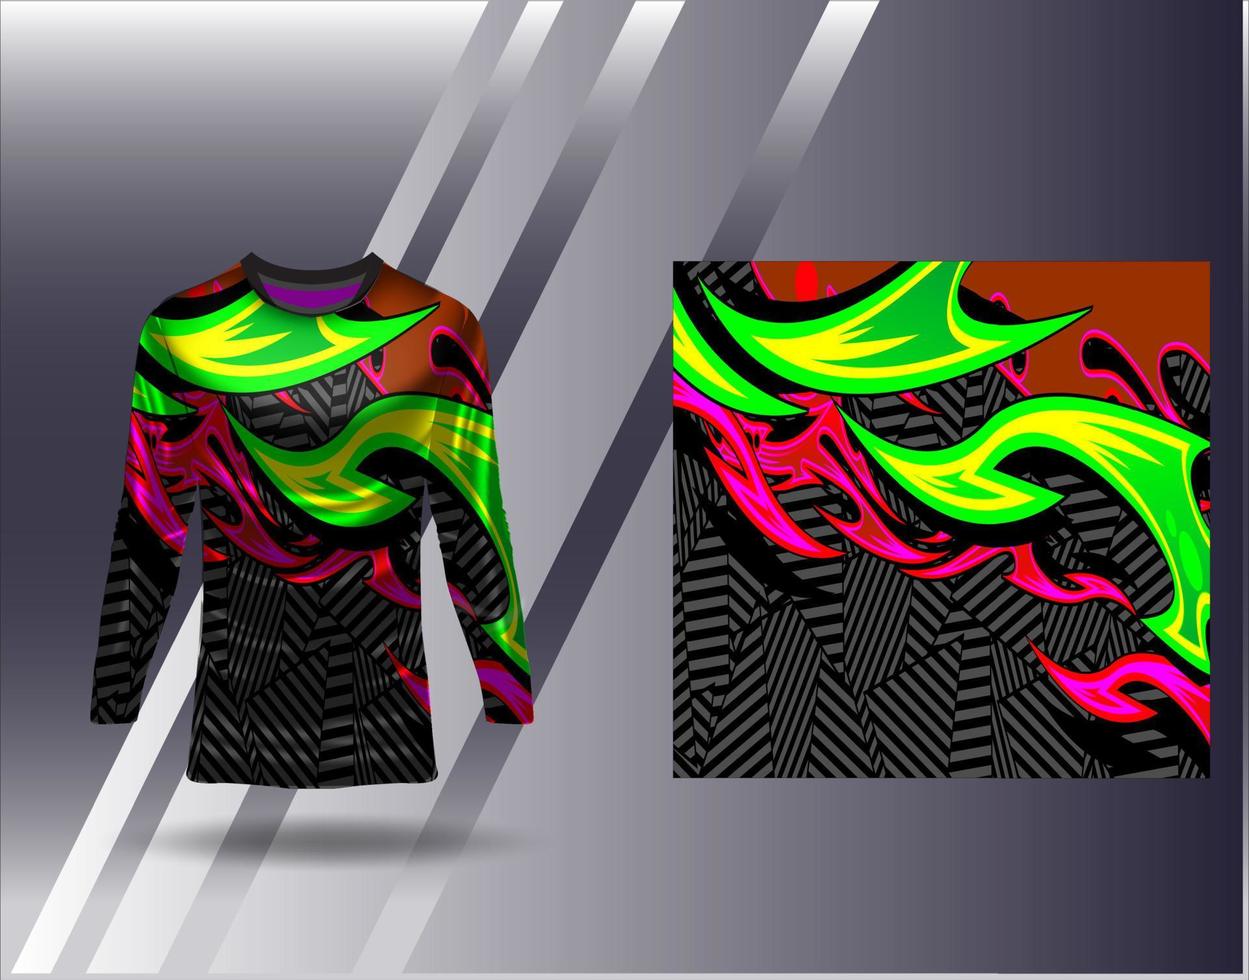 t-shirt sport- ontwerp voor racing Jersey wielersport Amerikaans voetbal gaming vector